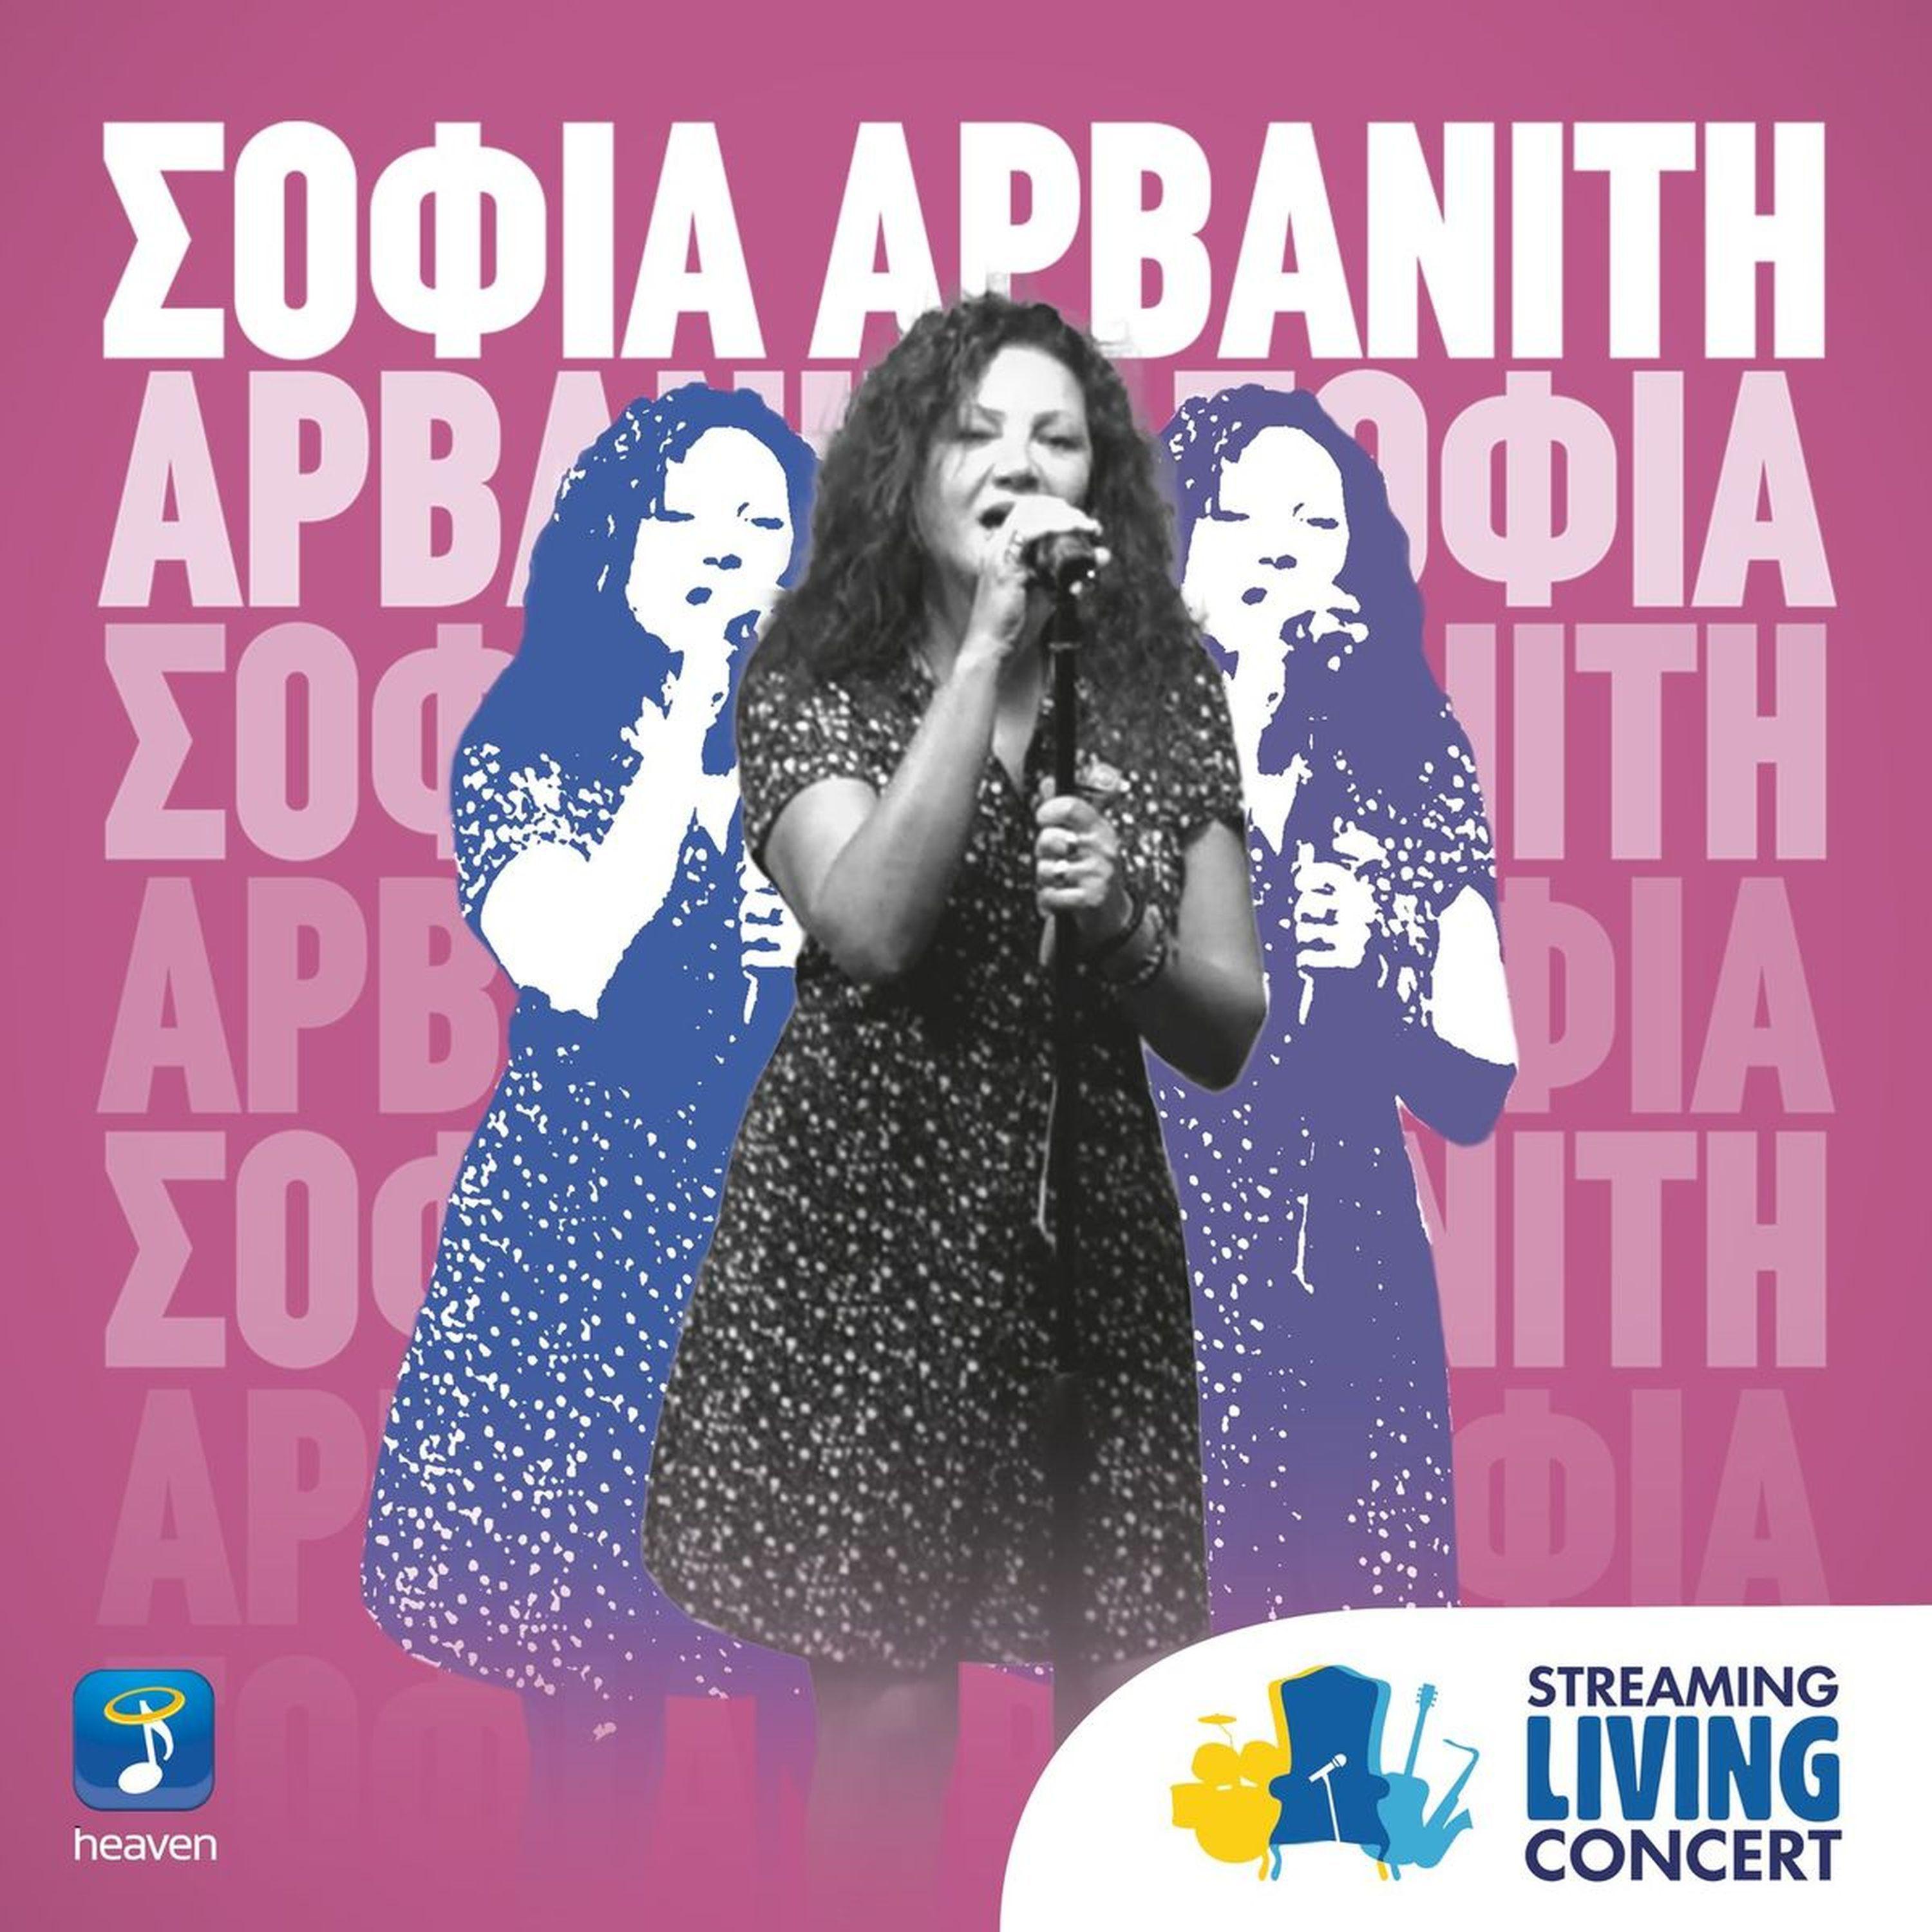 Sofia Arvaniti - Blehtika (Streaming Living Concert)